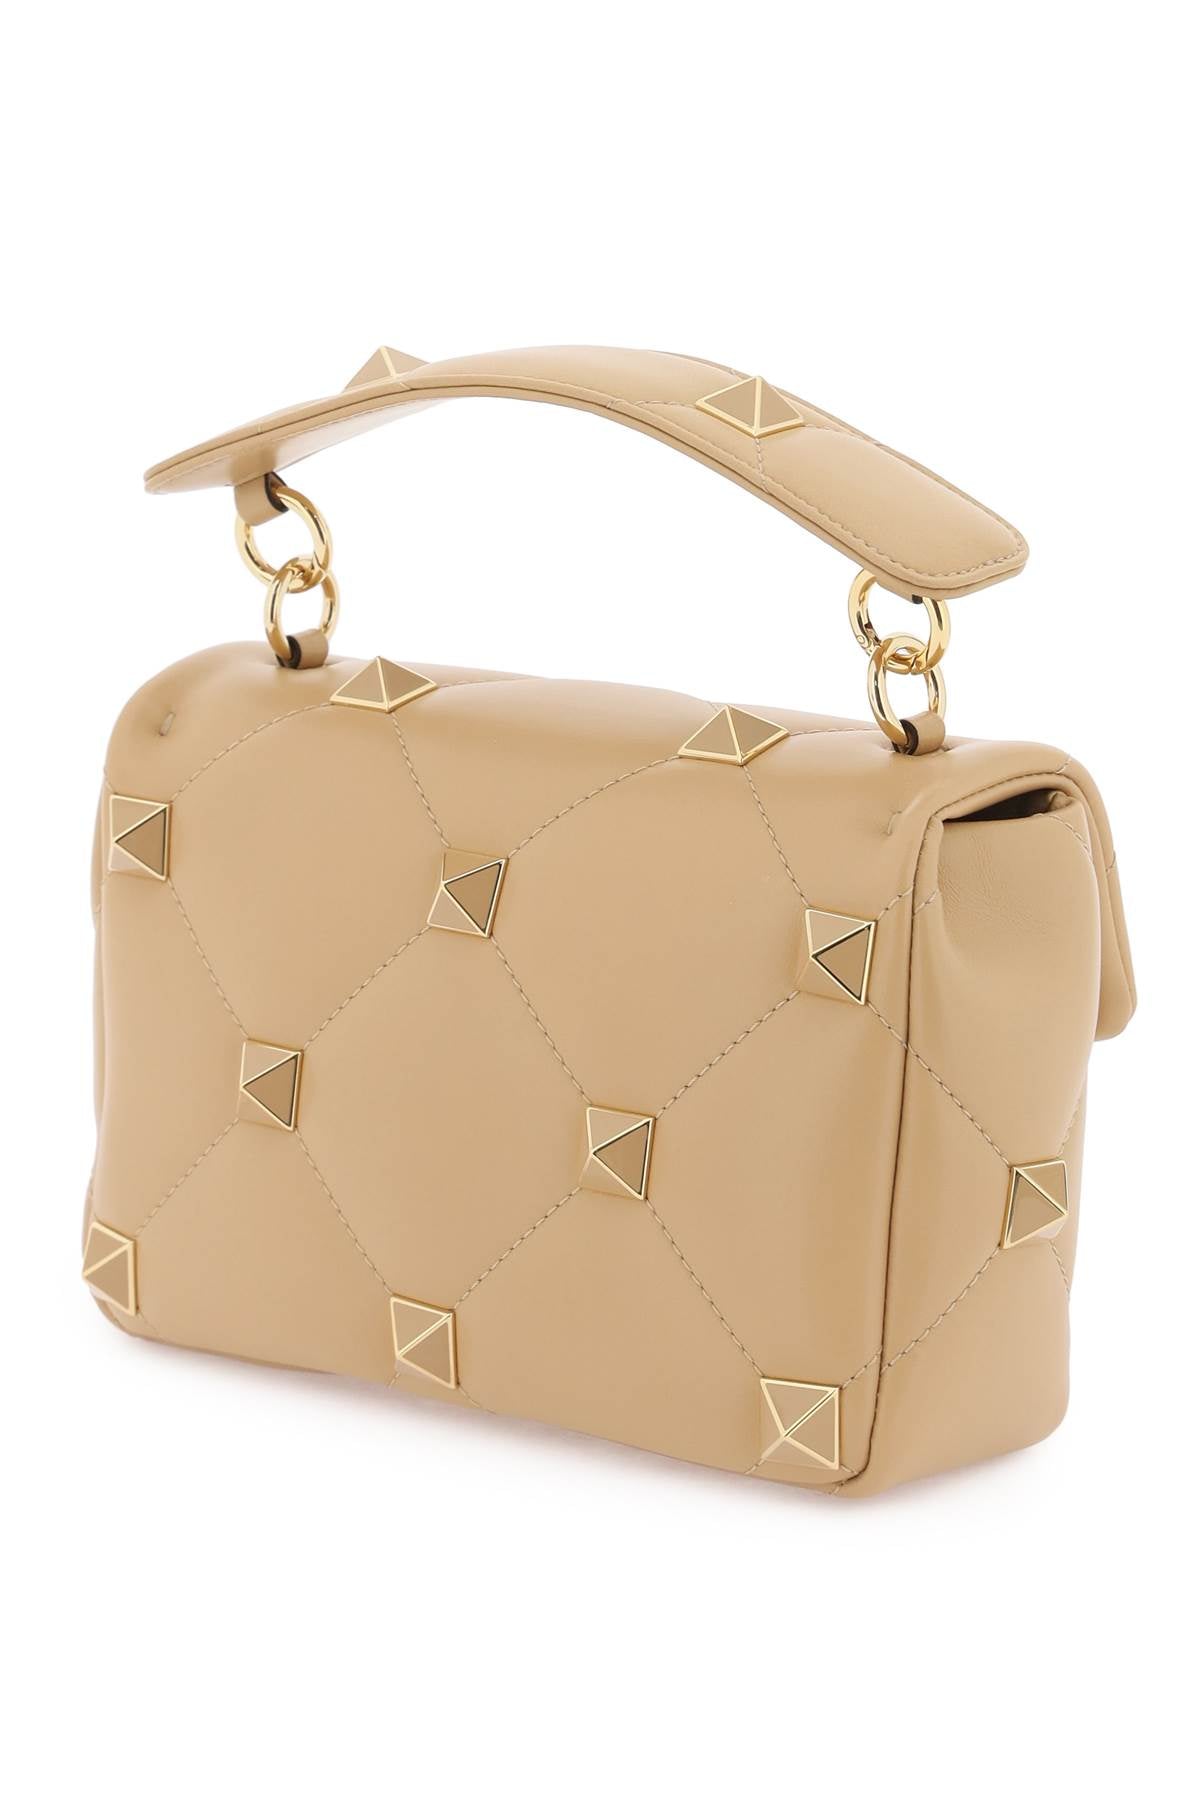 VALENTINO GARAVANI Quilted Nappa Leather Handbag with Enamel Studs